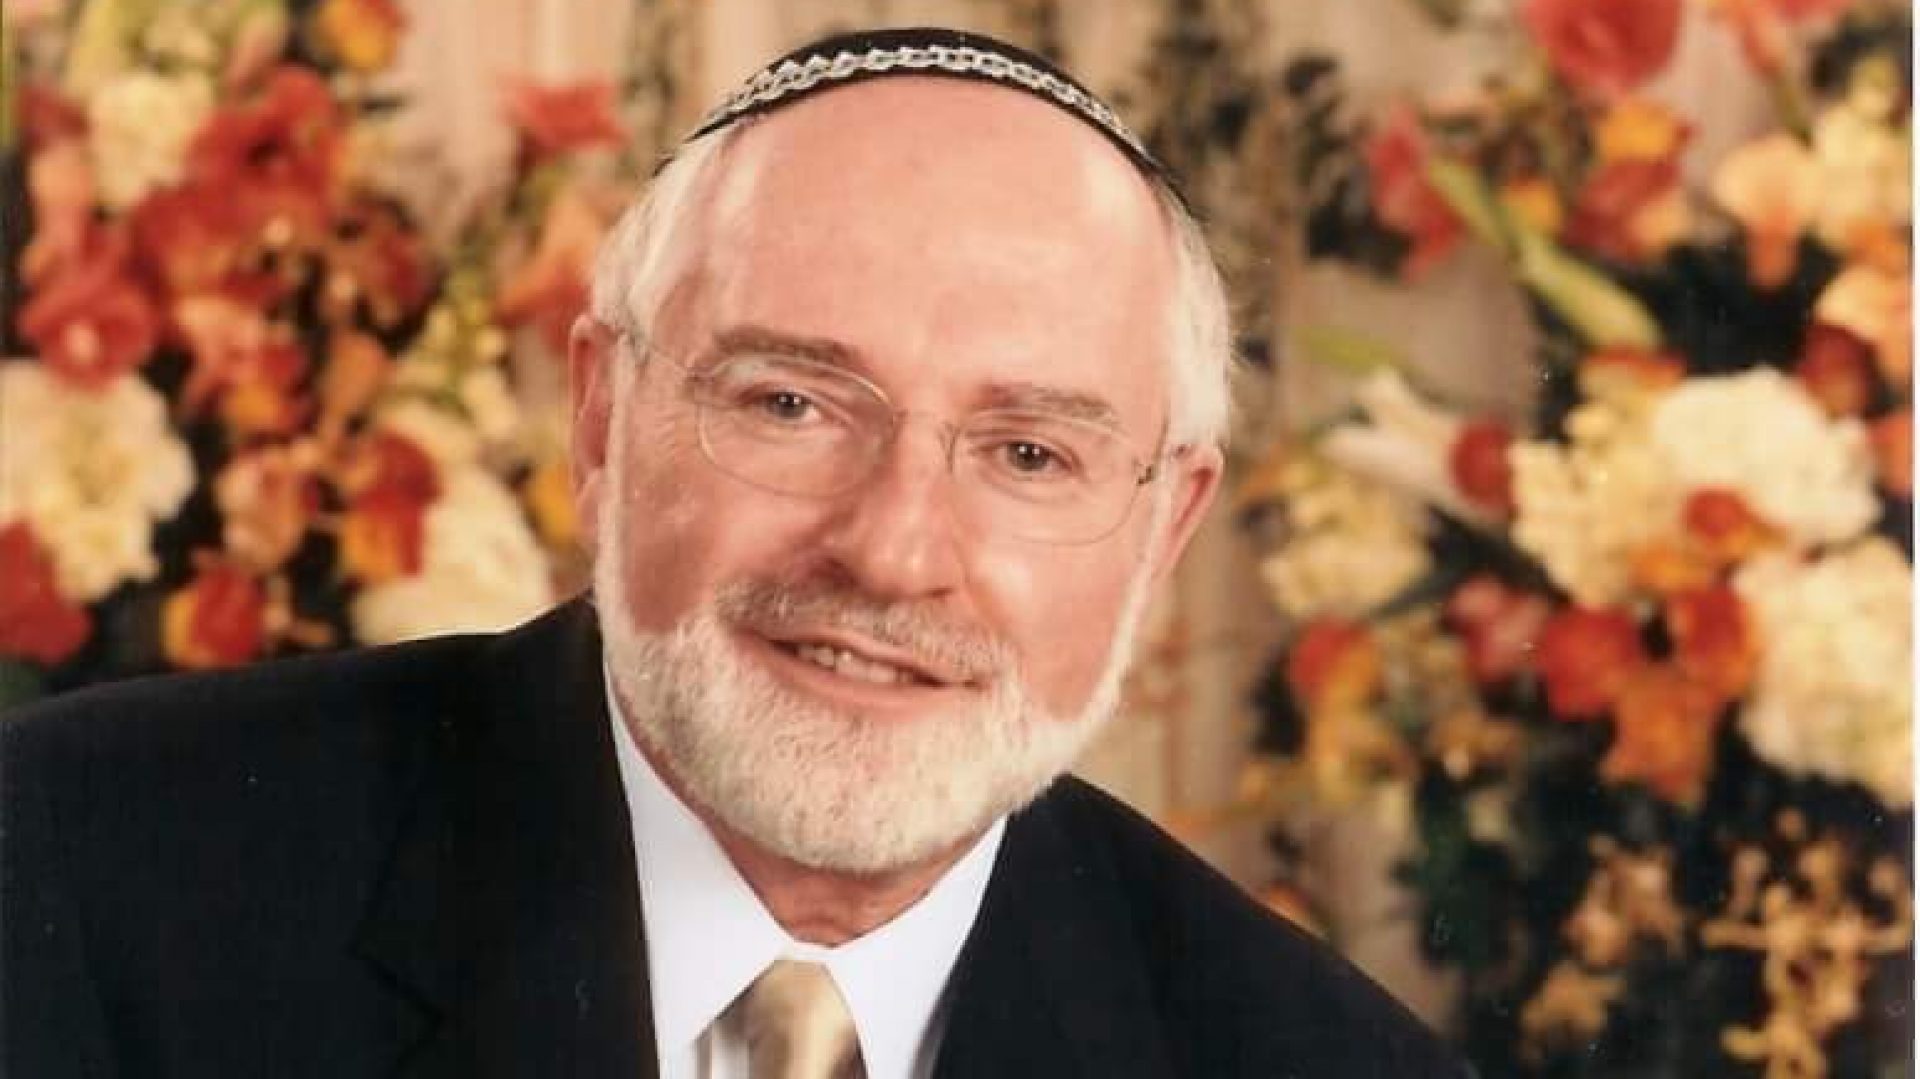 Rabbi Dr. Bernhard Rosenberg